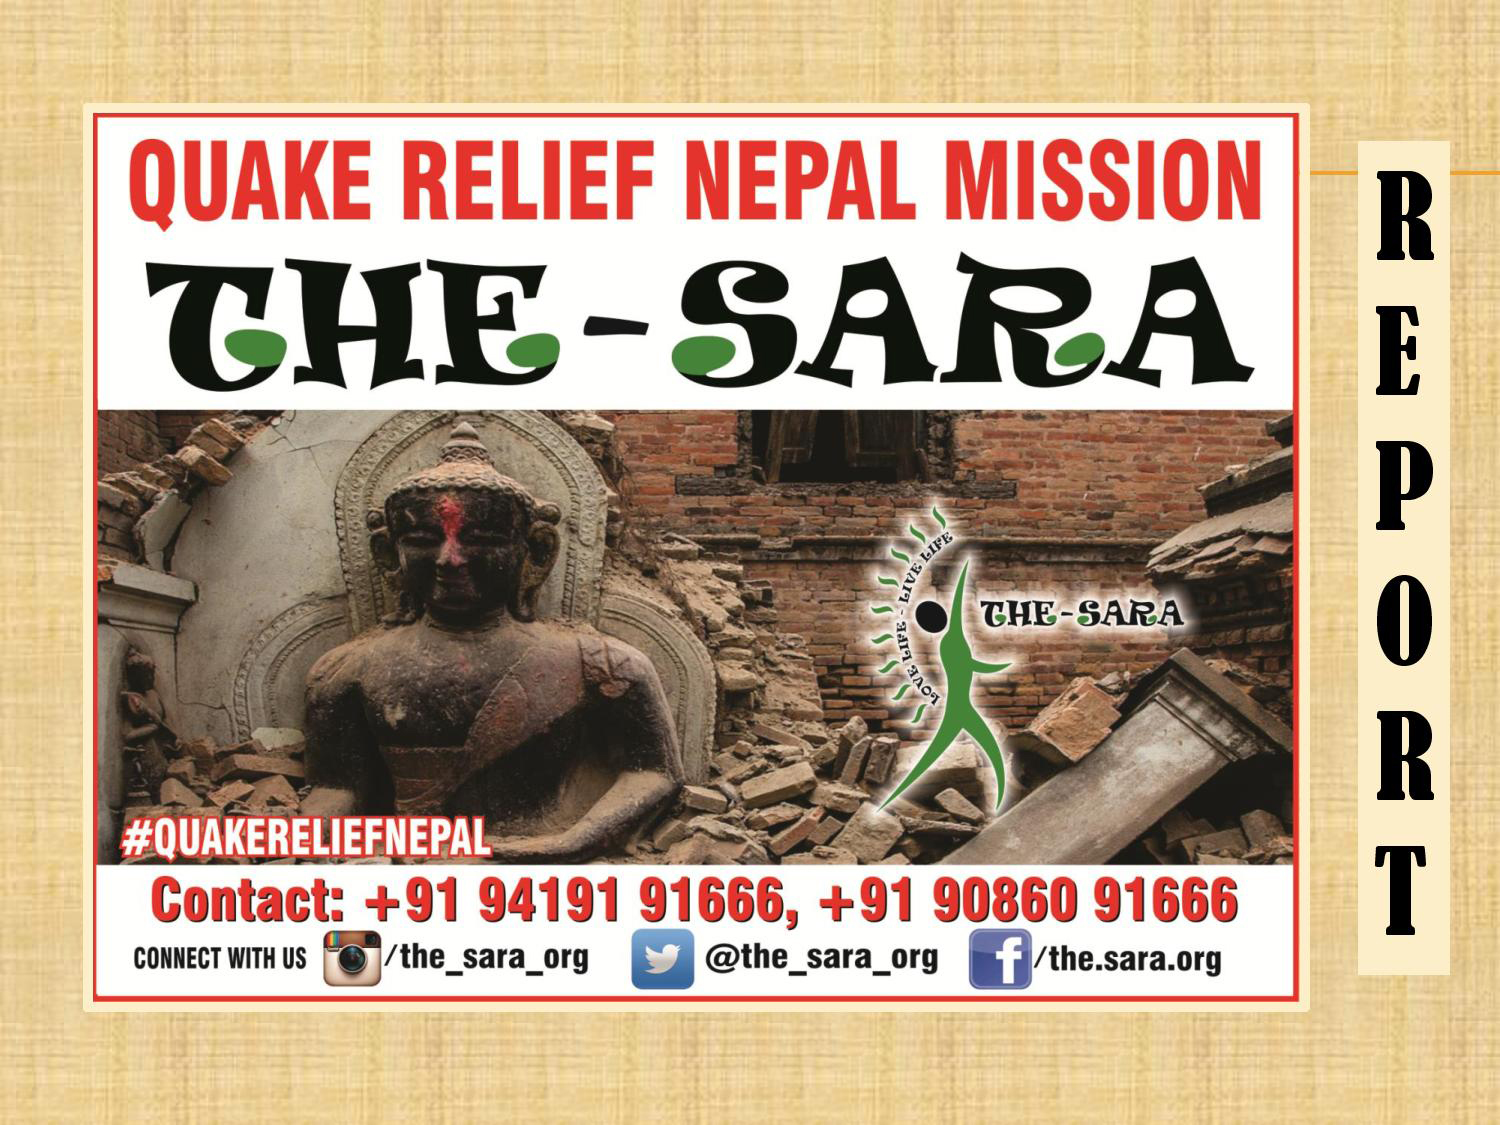 Quake Relief Nepal Mission 2015-Image